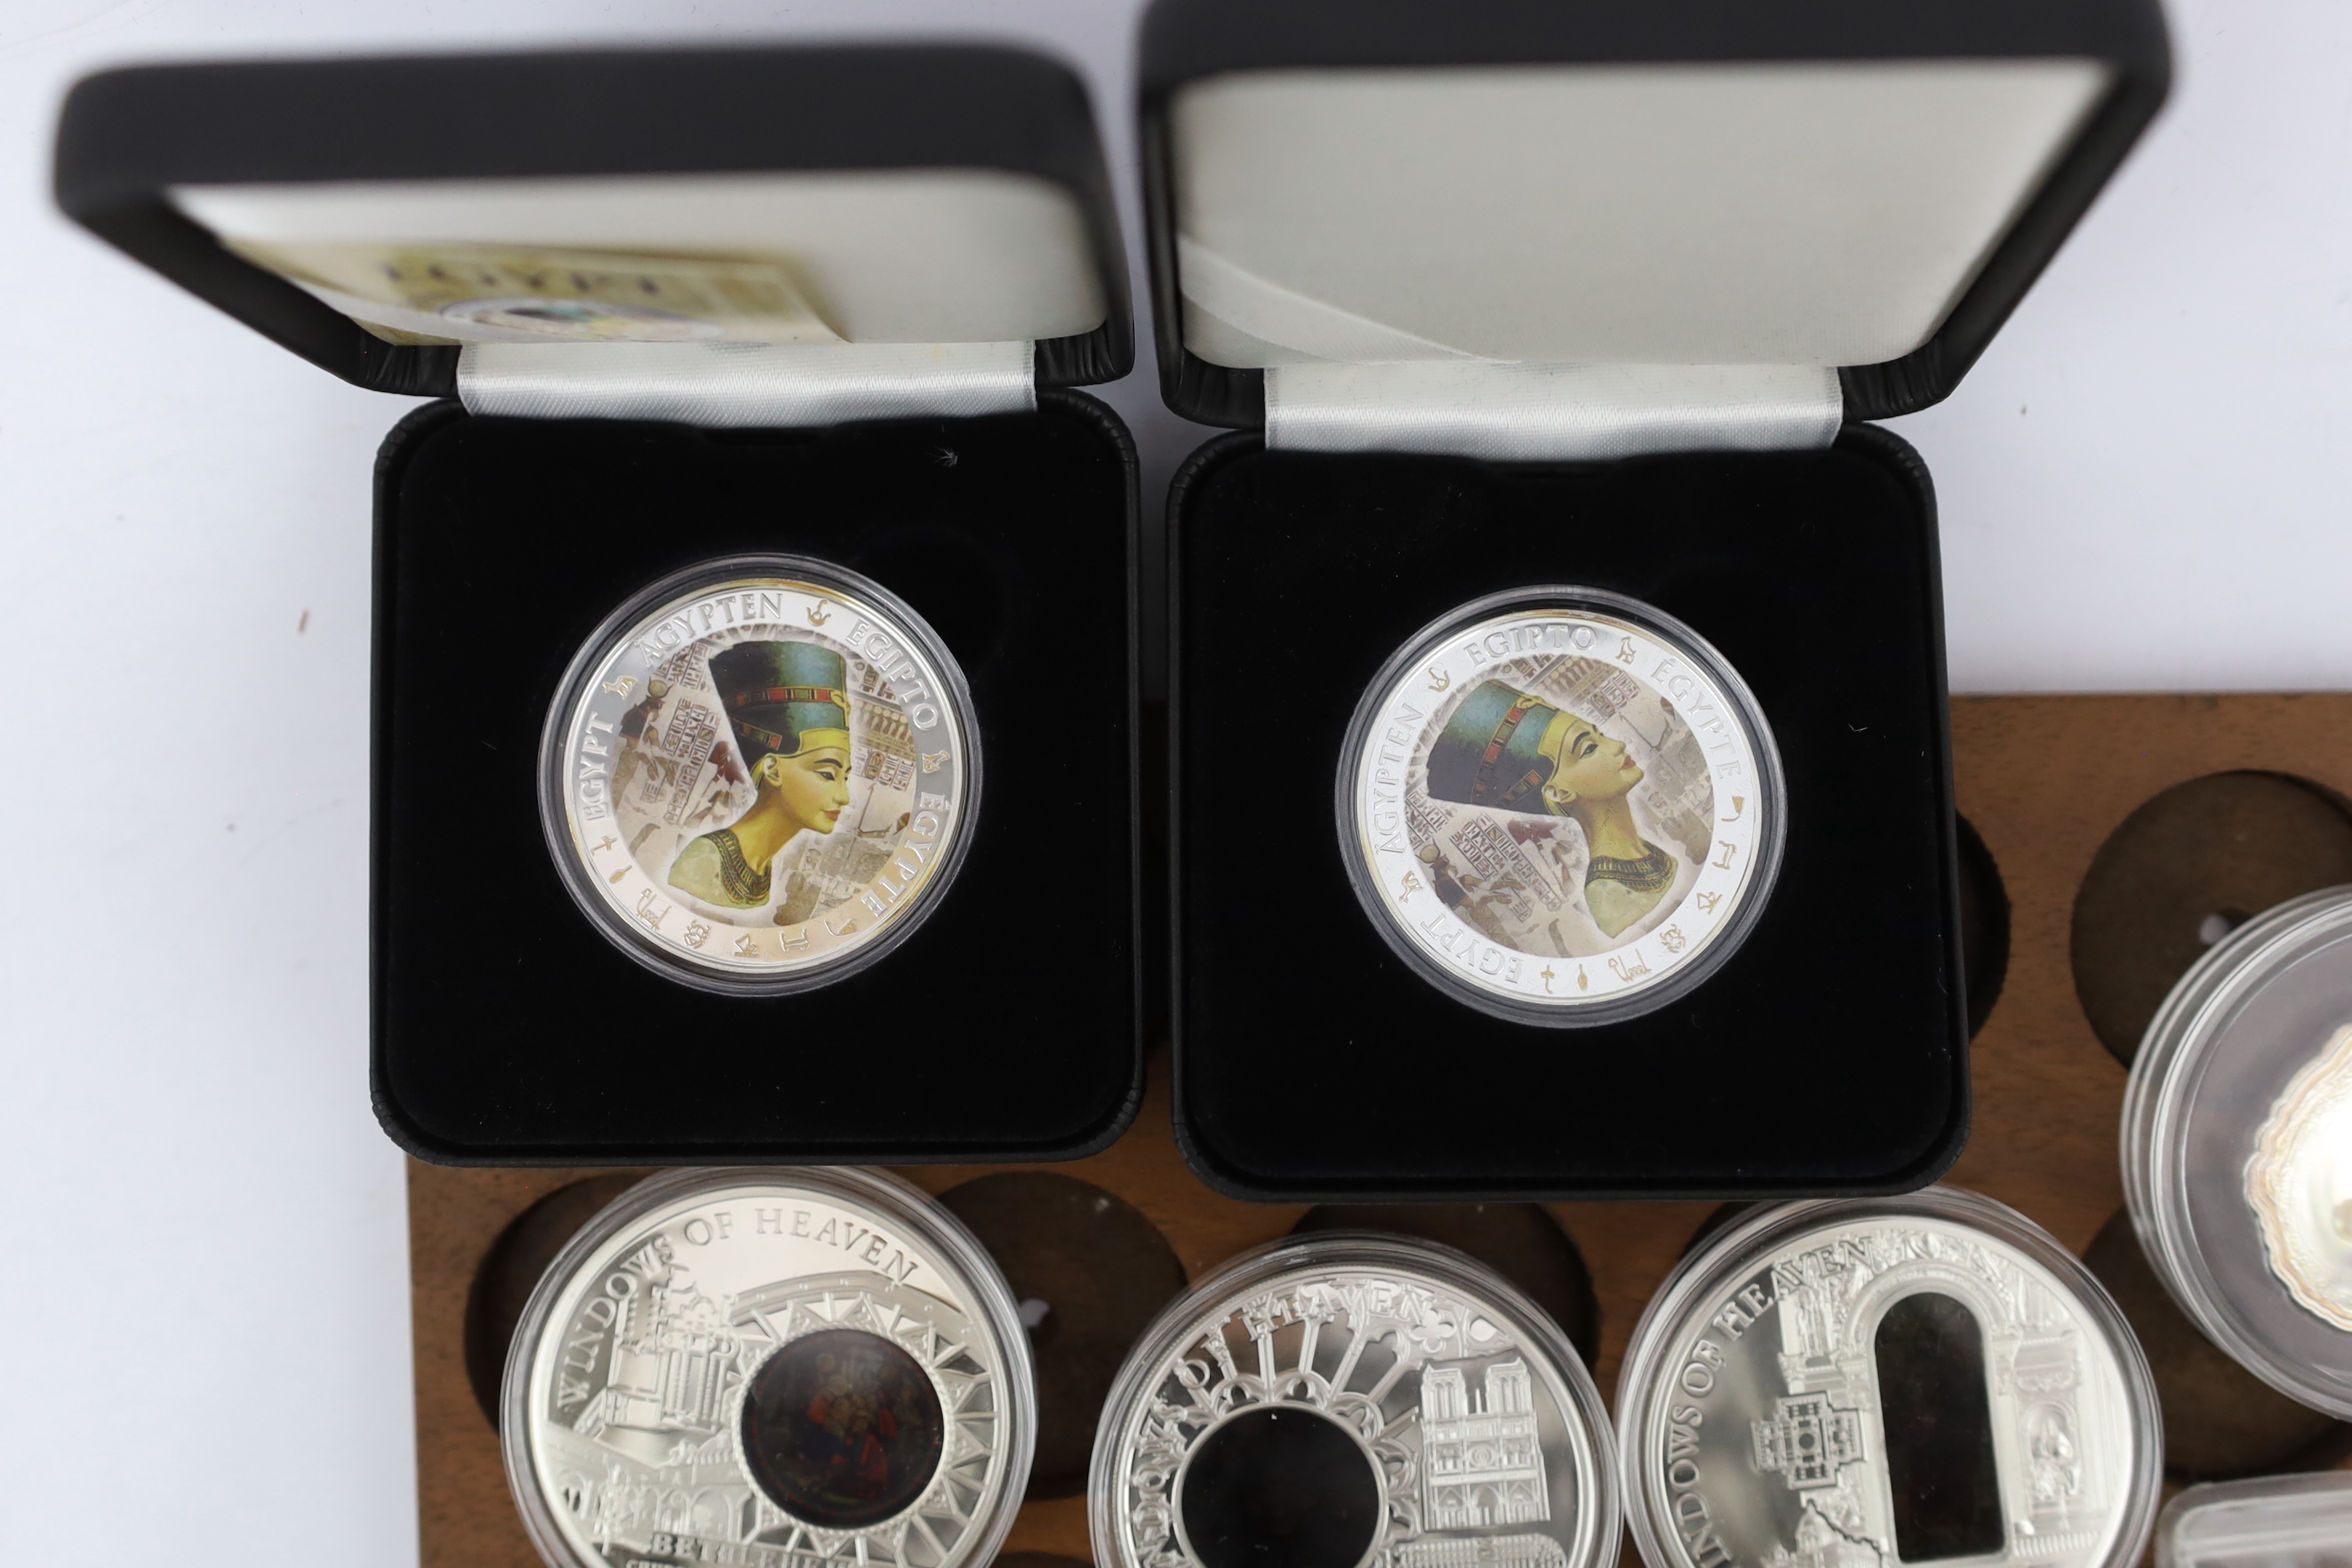 Elizabeth II Cook Islands silver proof commemorative coins, six windows of heaven $10, a Christmas 2009 $5, Republic of Palau shells of the sea 2011 $5 ‘pearl oyster’, Sacred Art Holy Windows 2011 $10, two Fiji Nefertiti